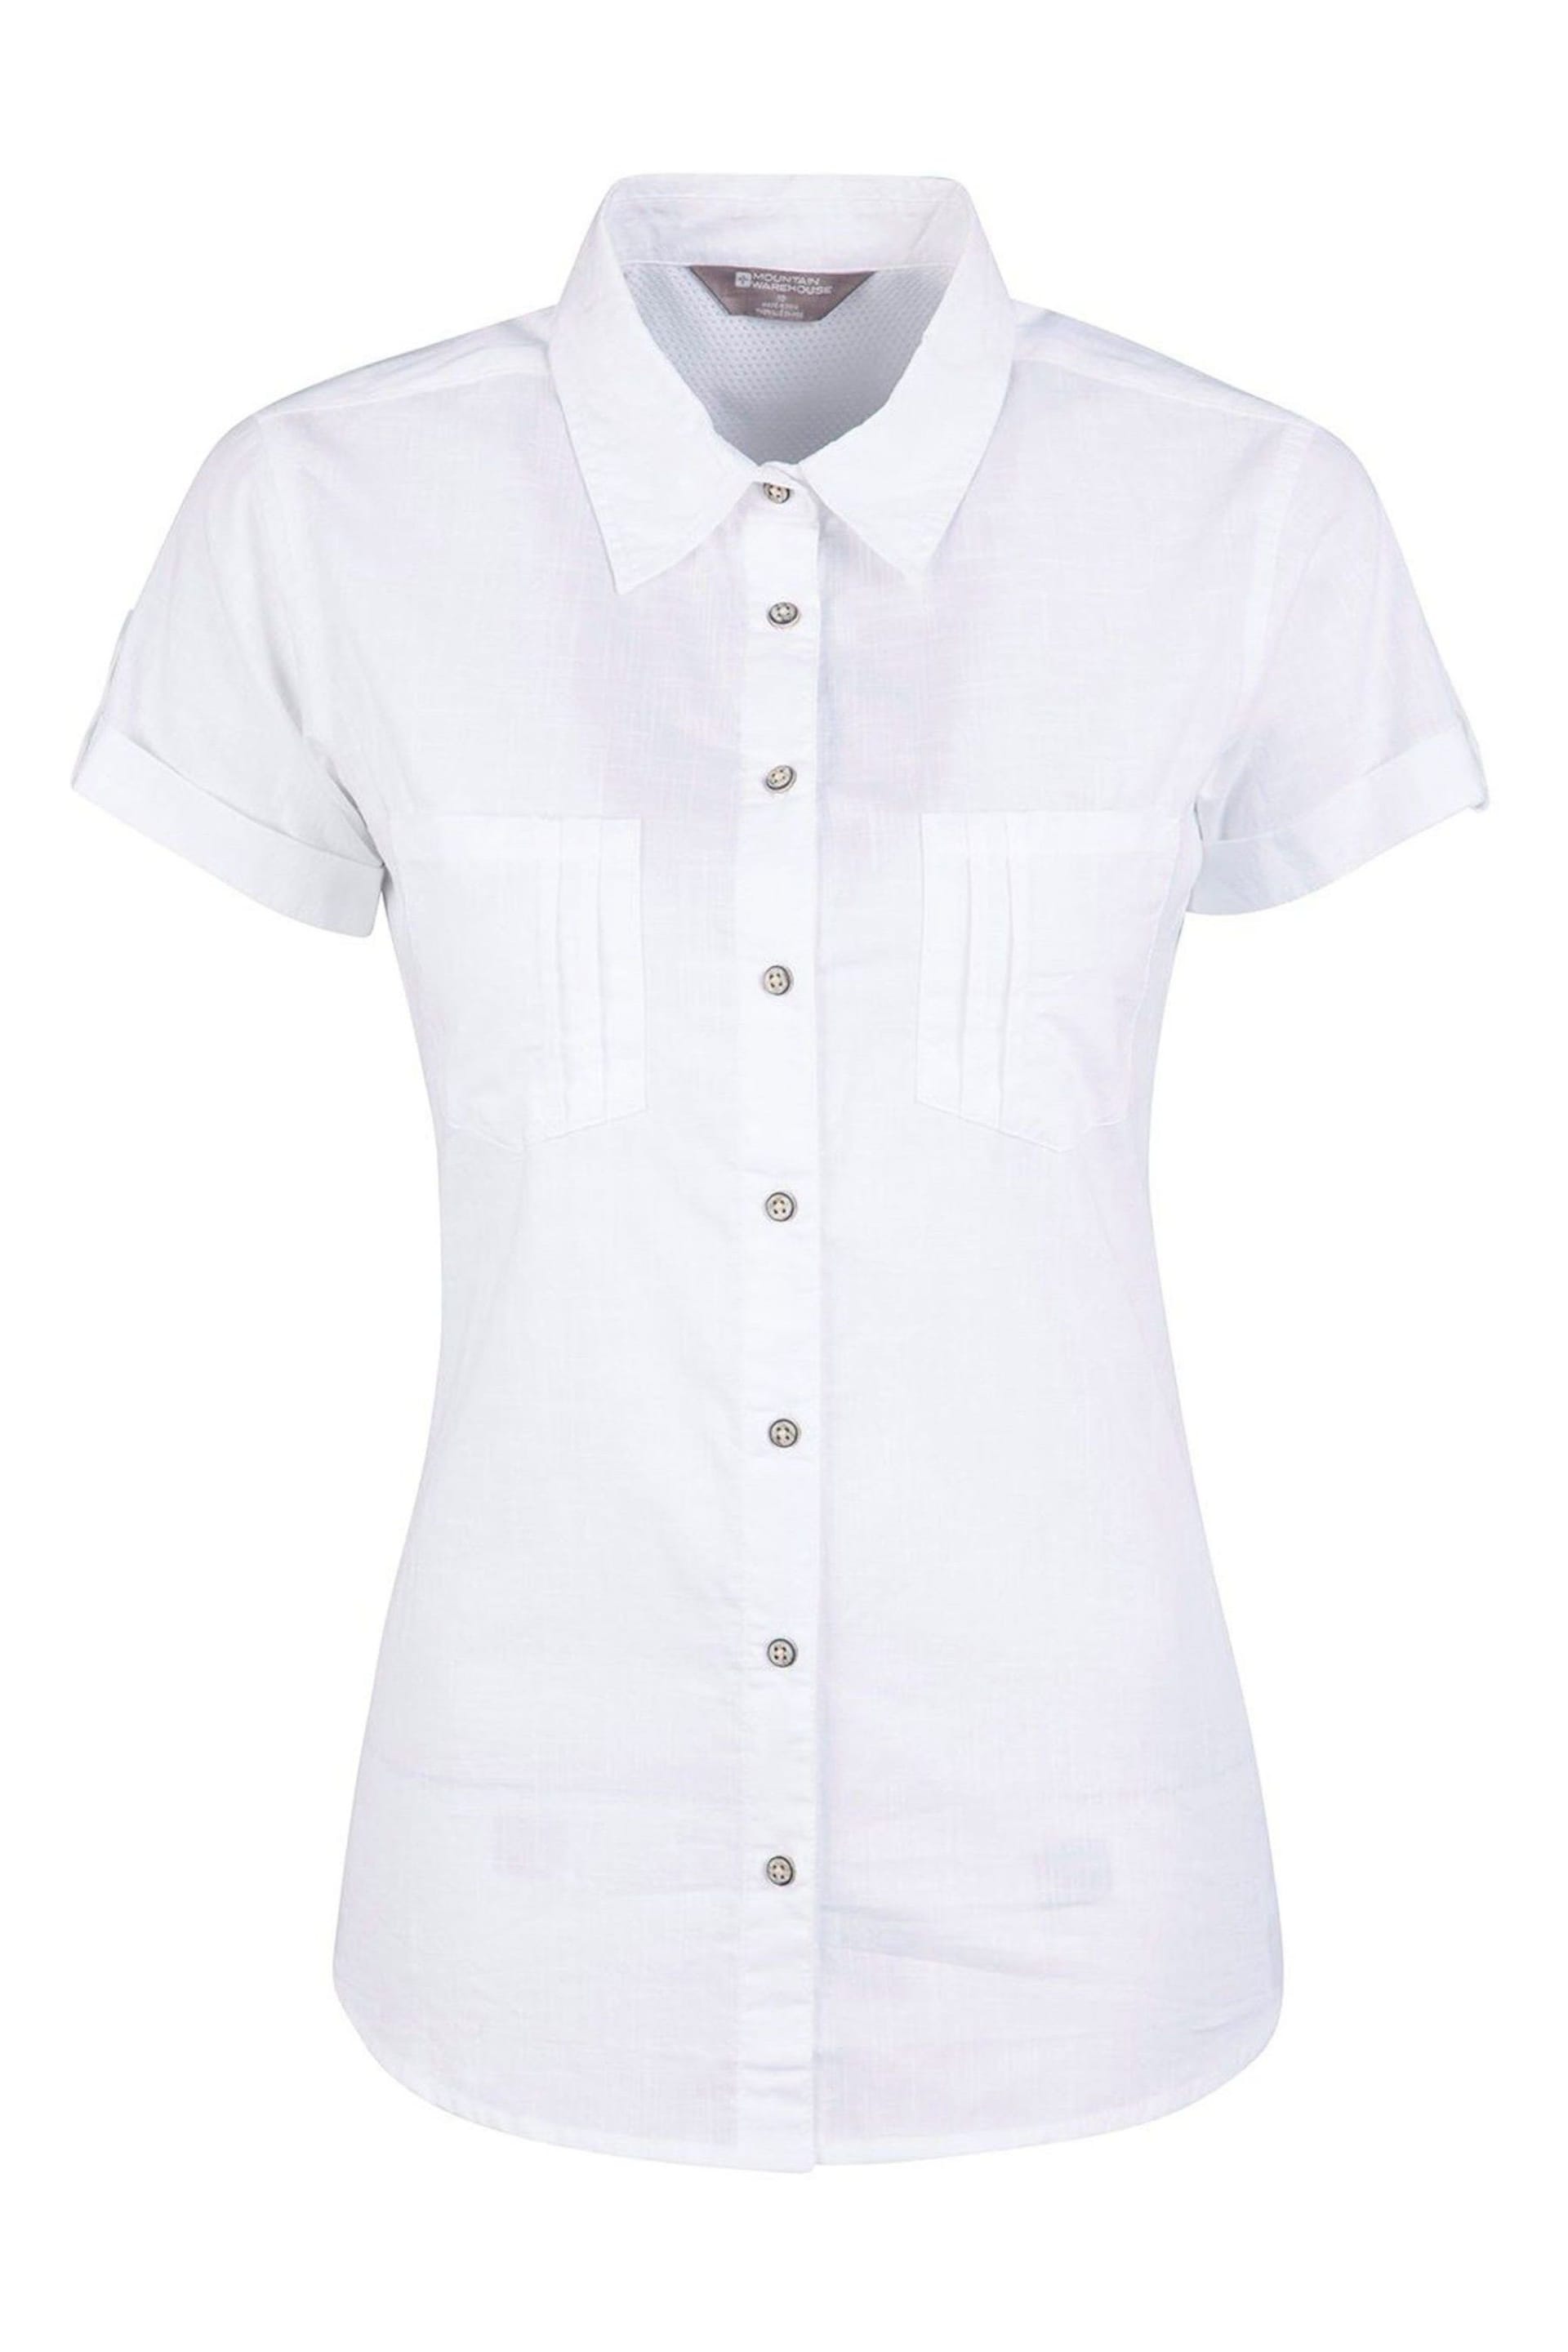 Mountain Warehouse White Coconut Short Sleeve Womens Shirt - Image 2 of 5